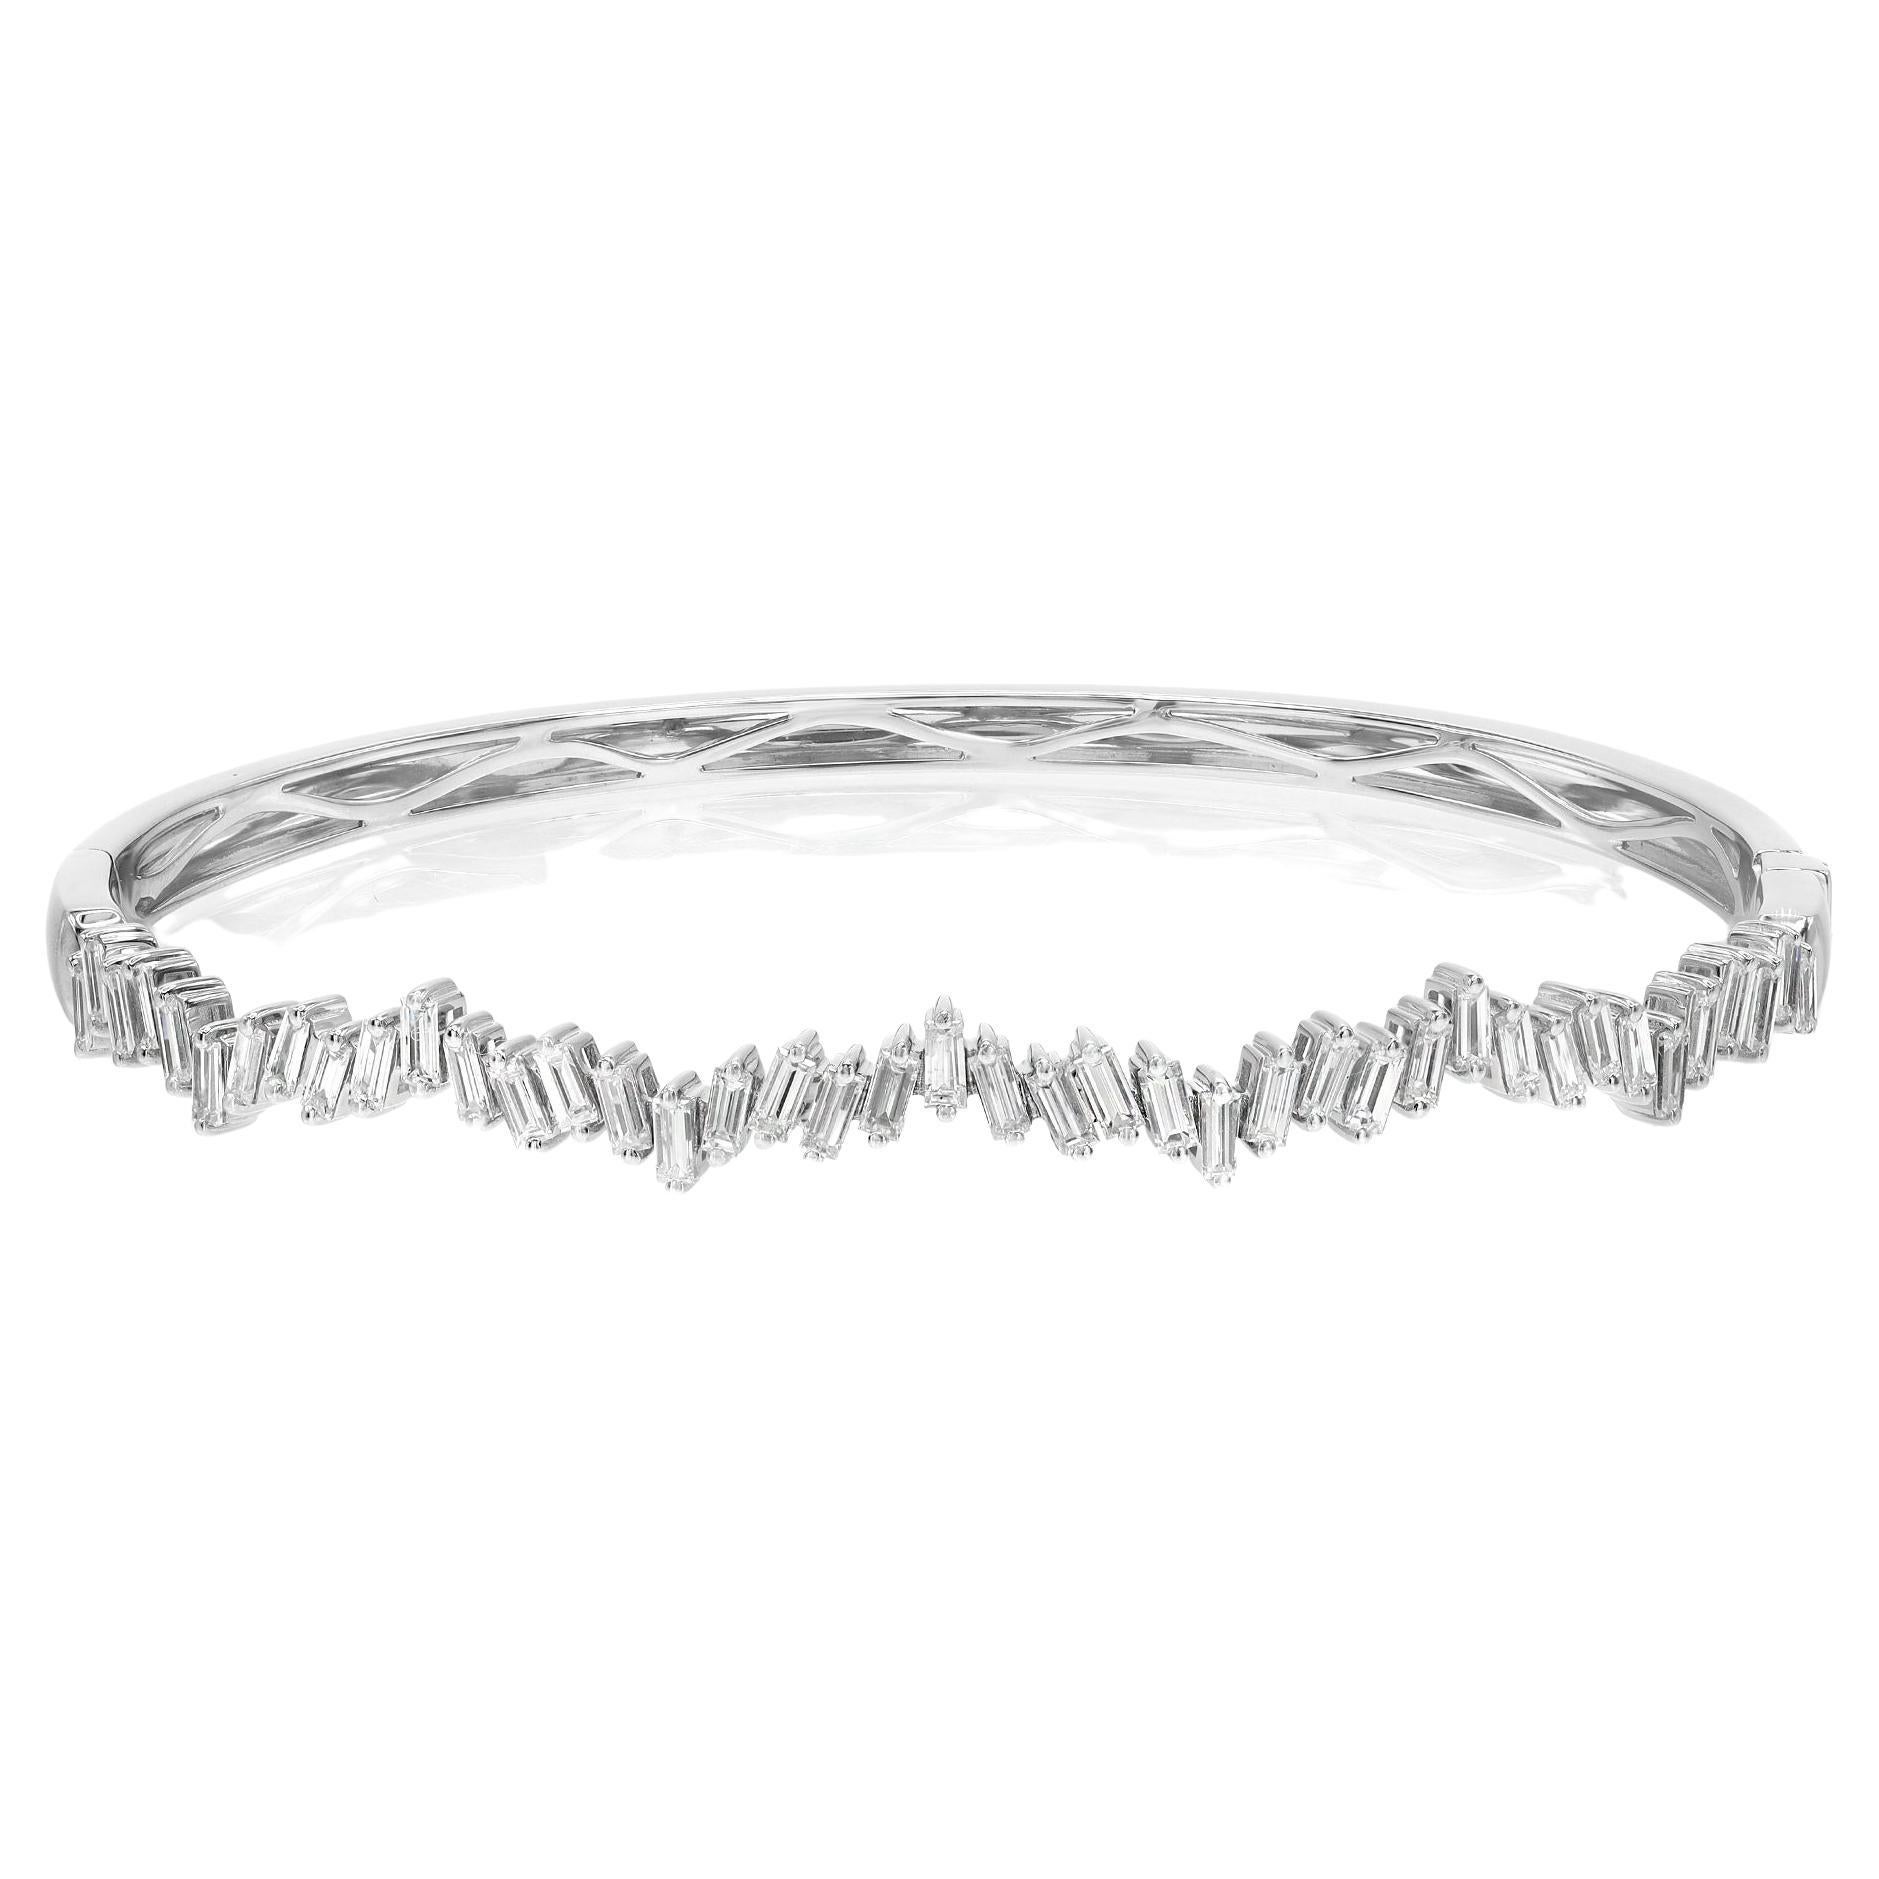 Rachel Koen Baguette Cut Diamond Bangle Bracelet 18K White Gold 1.57Cttw